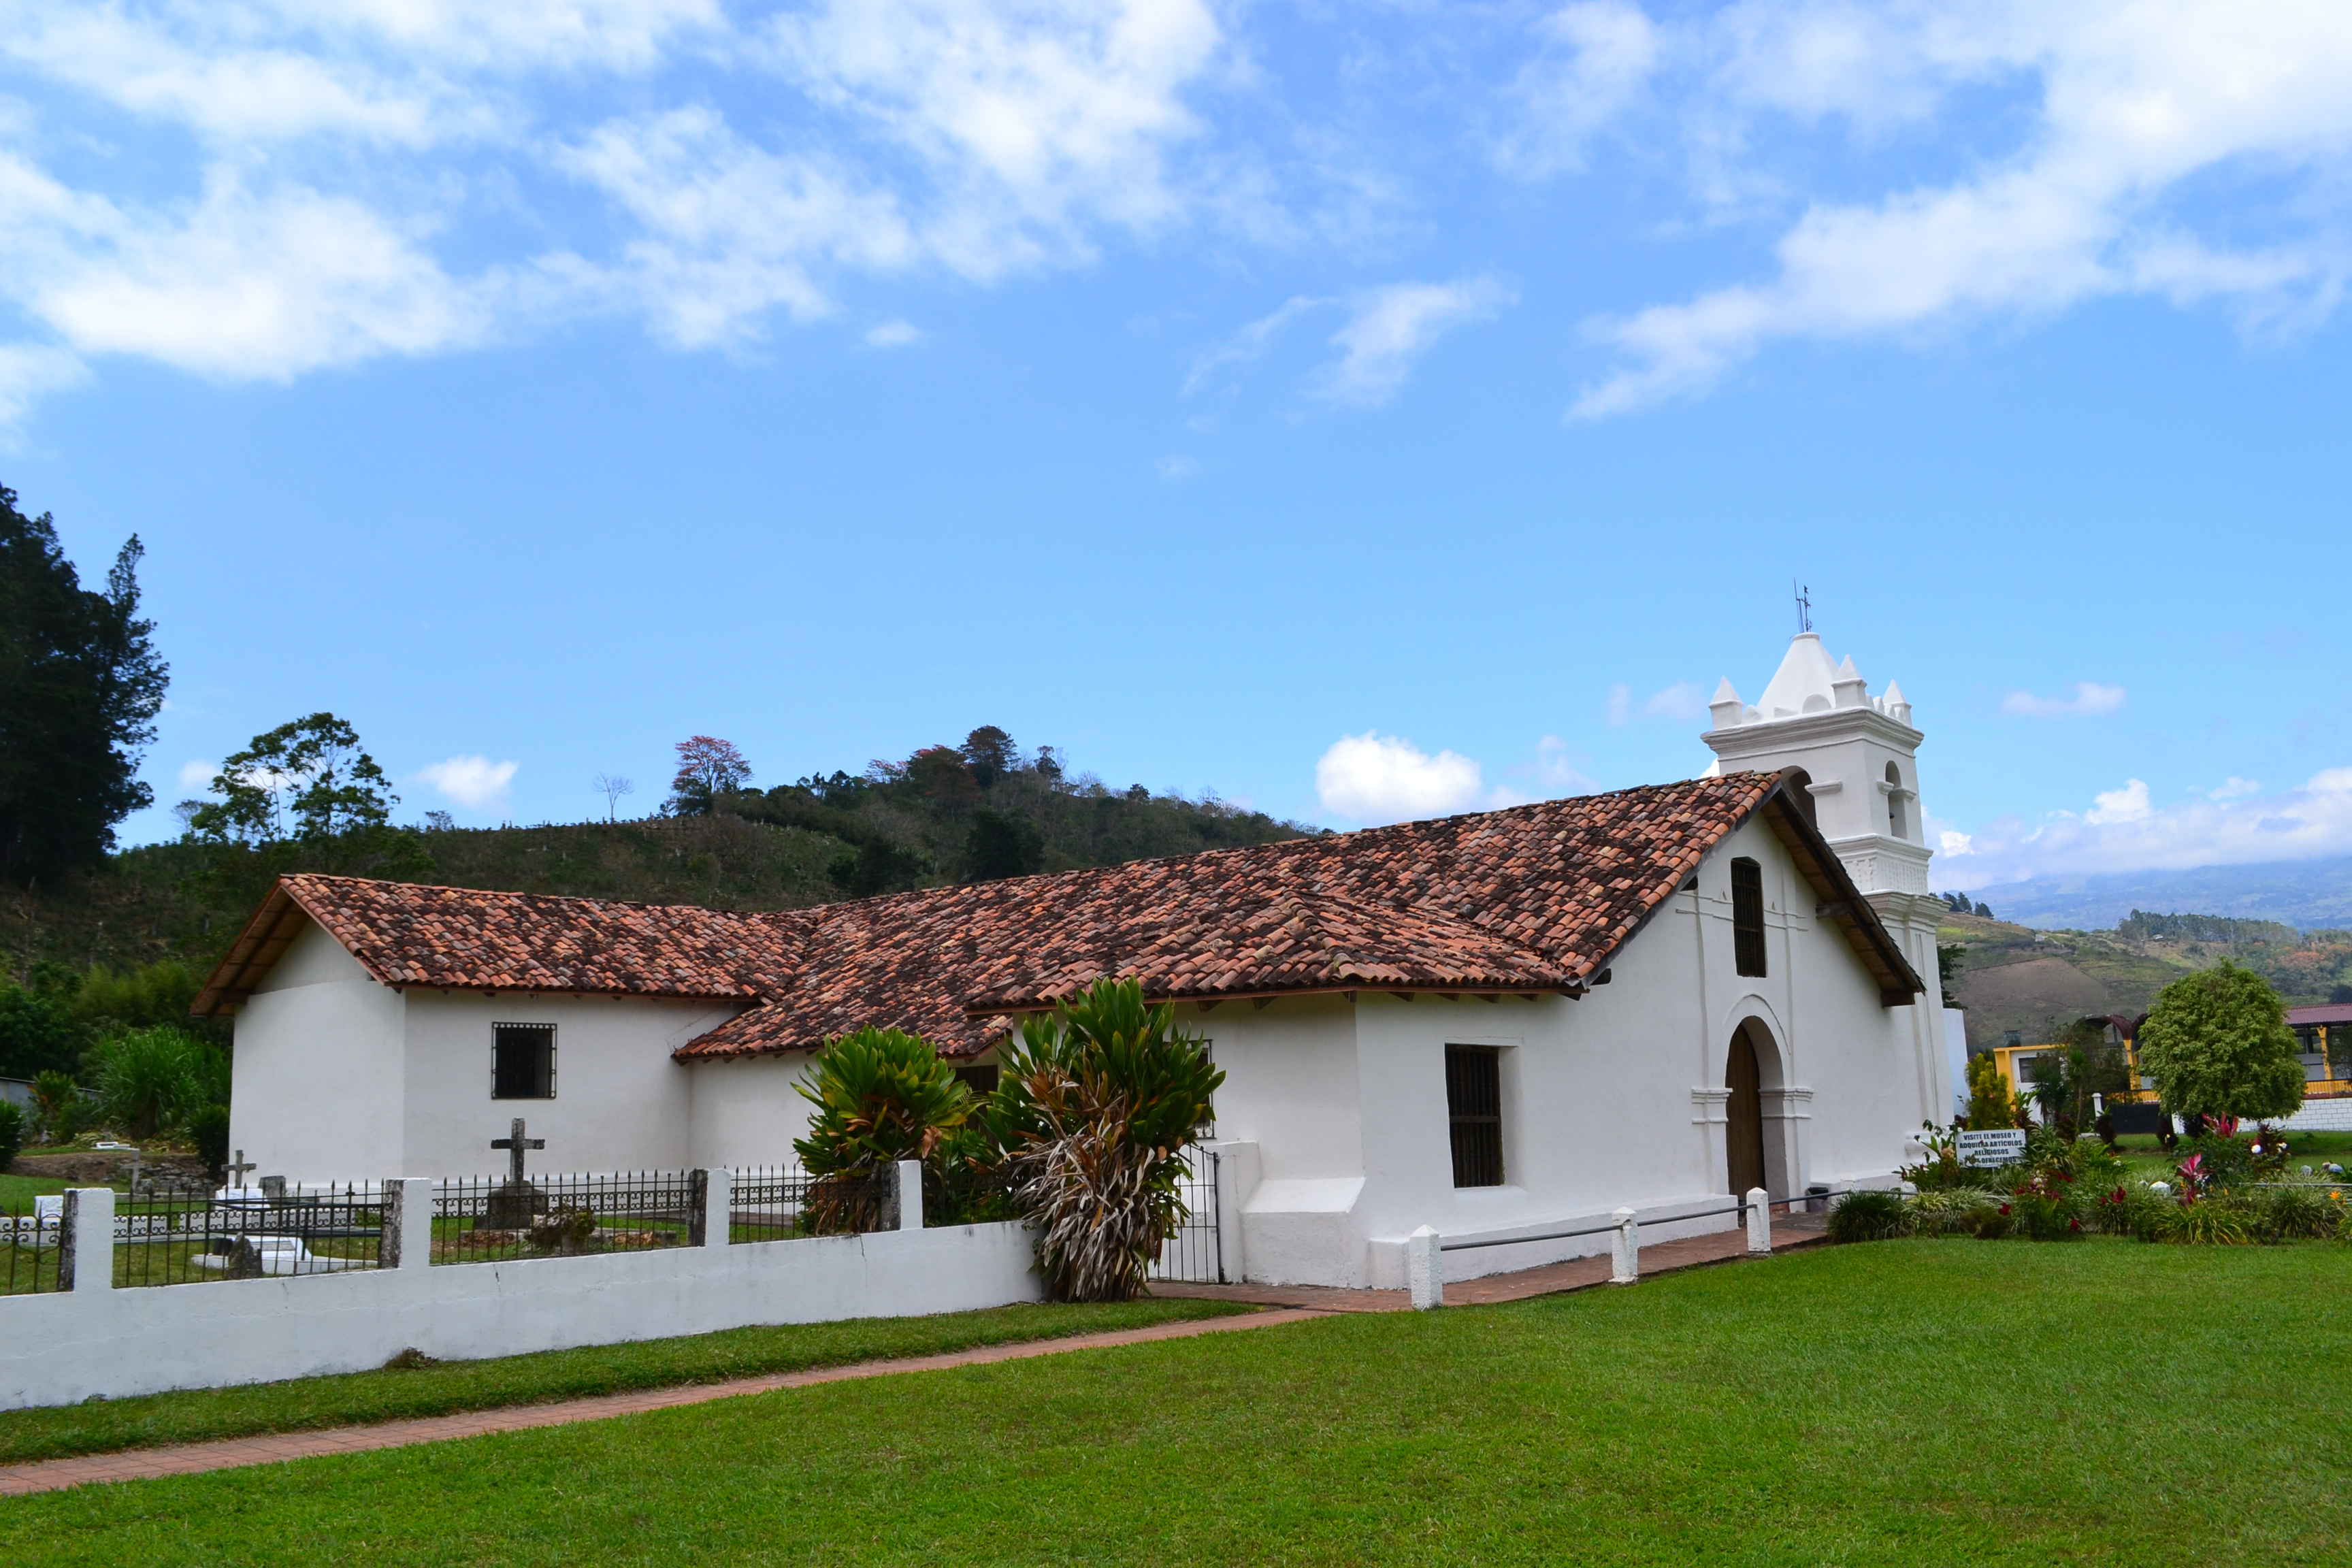 Foto: Iglesia De Orosi - Orosi (Cartago), Costa Rica